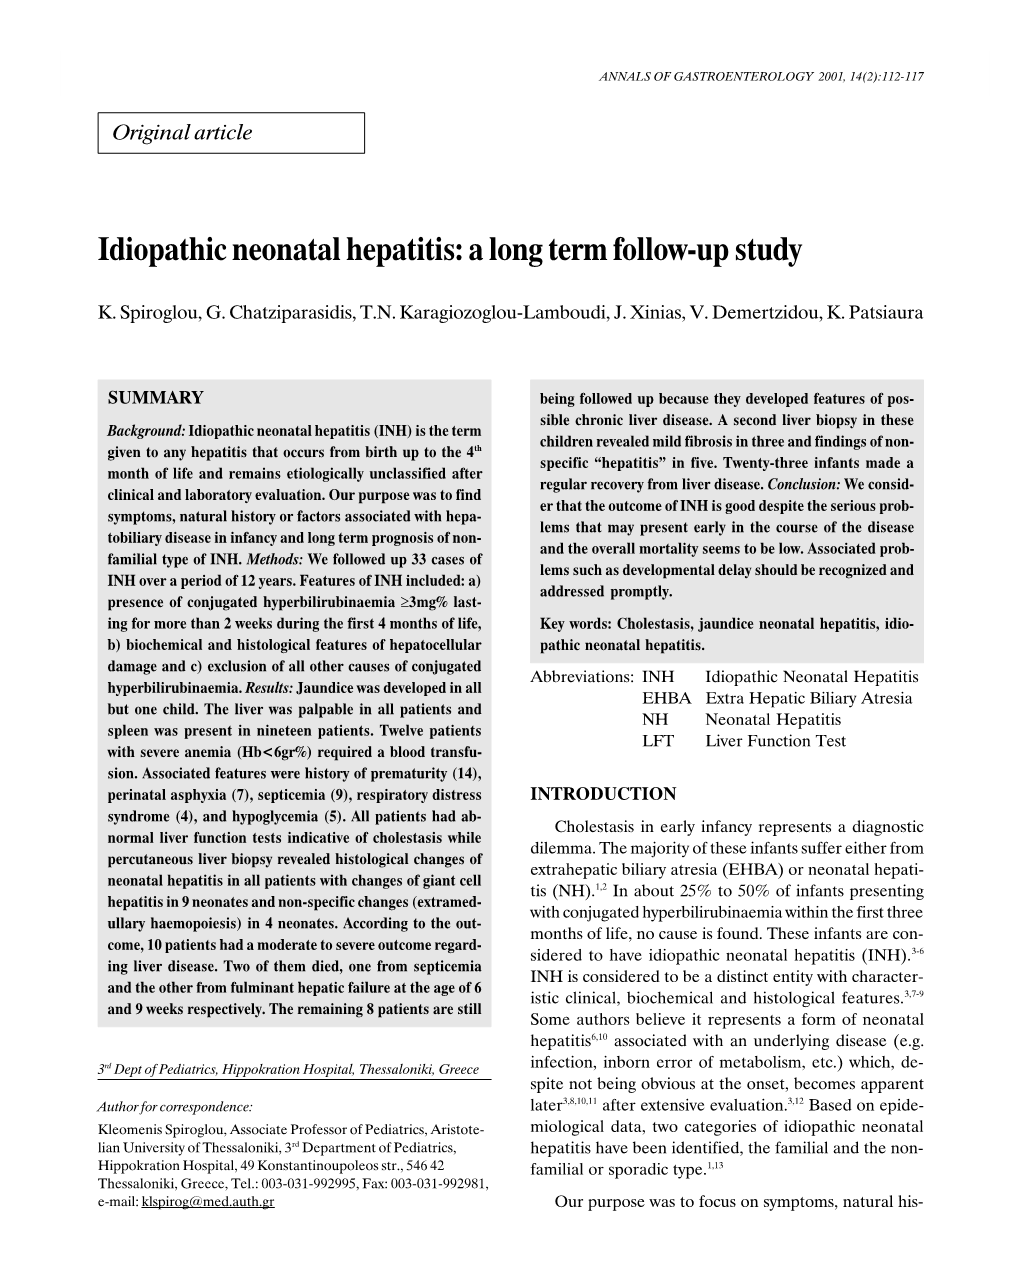 Idiopathic Neonatal Hepatitis: a Long Term Follow-Up Study